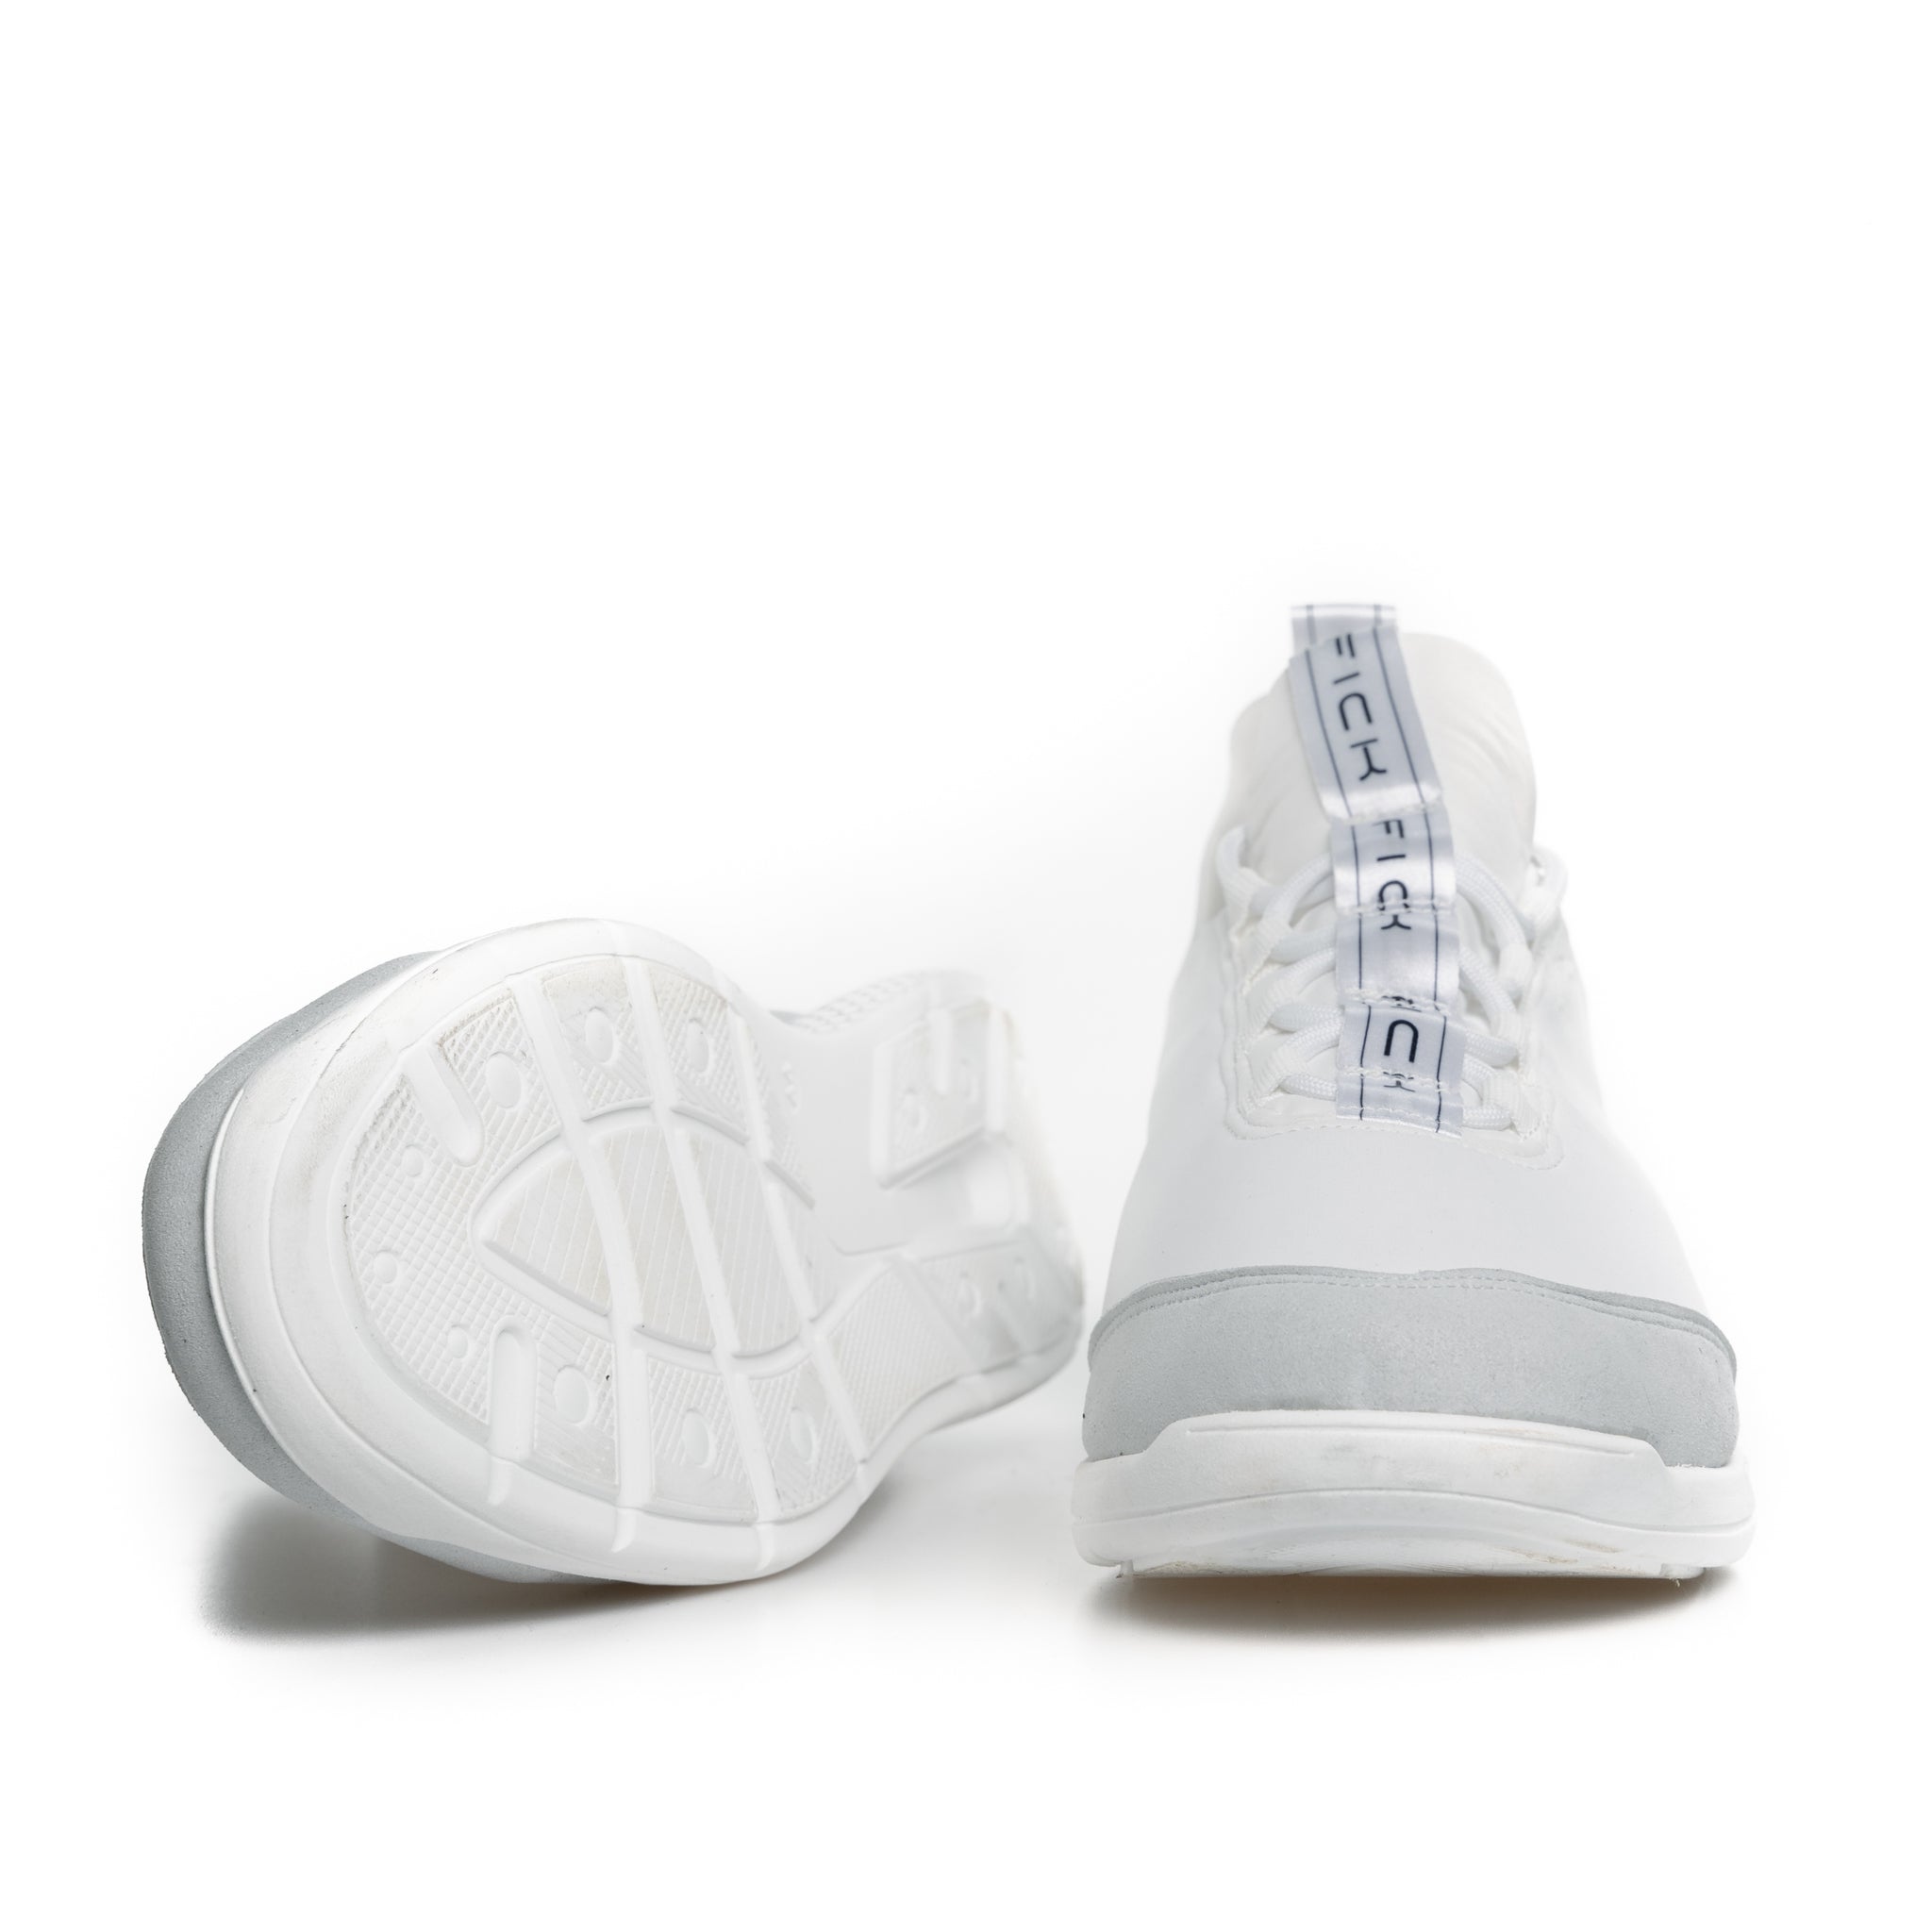 Zapatillas Lifestyle - Re-Bone - Blancas - Fick Company